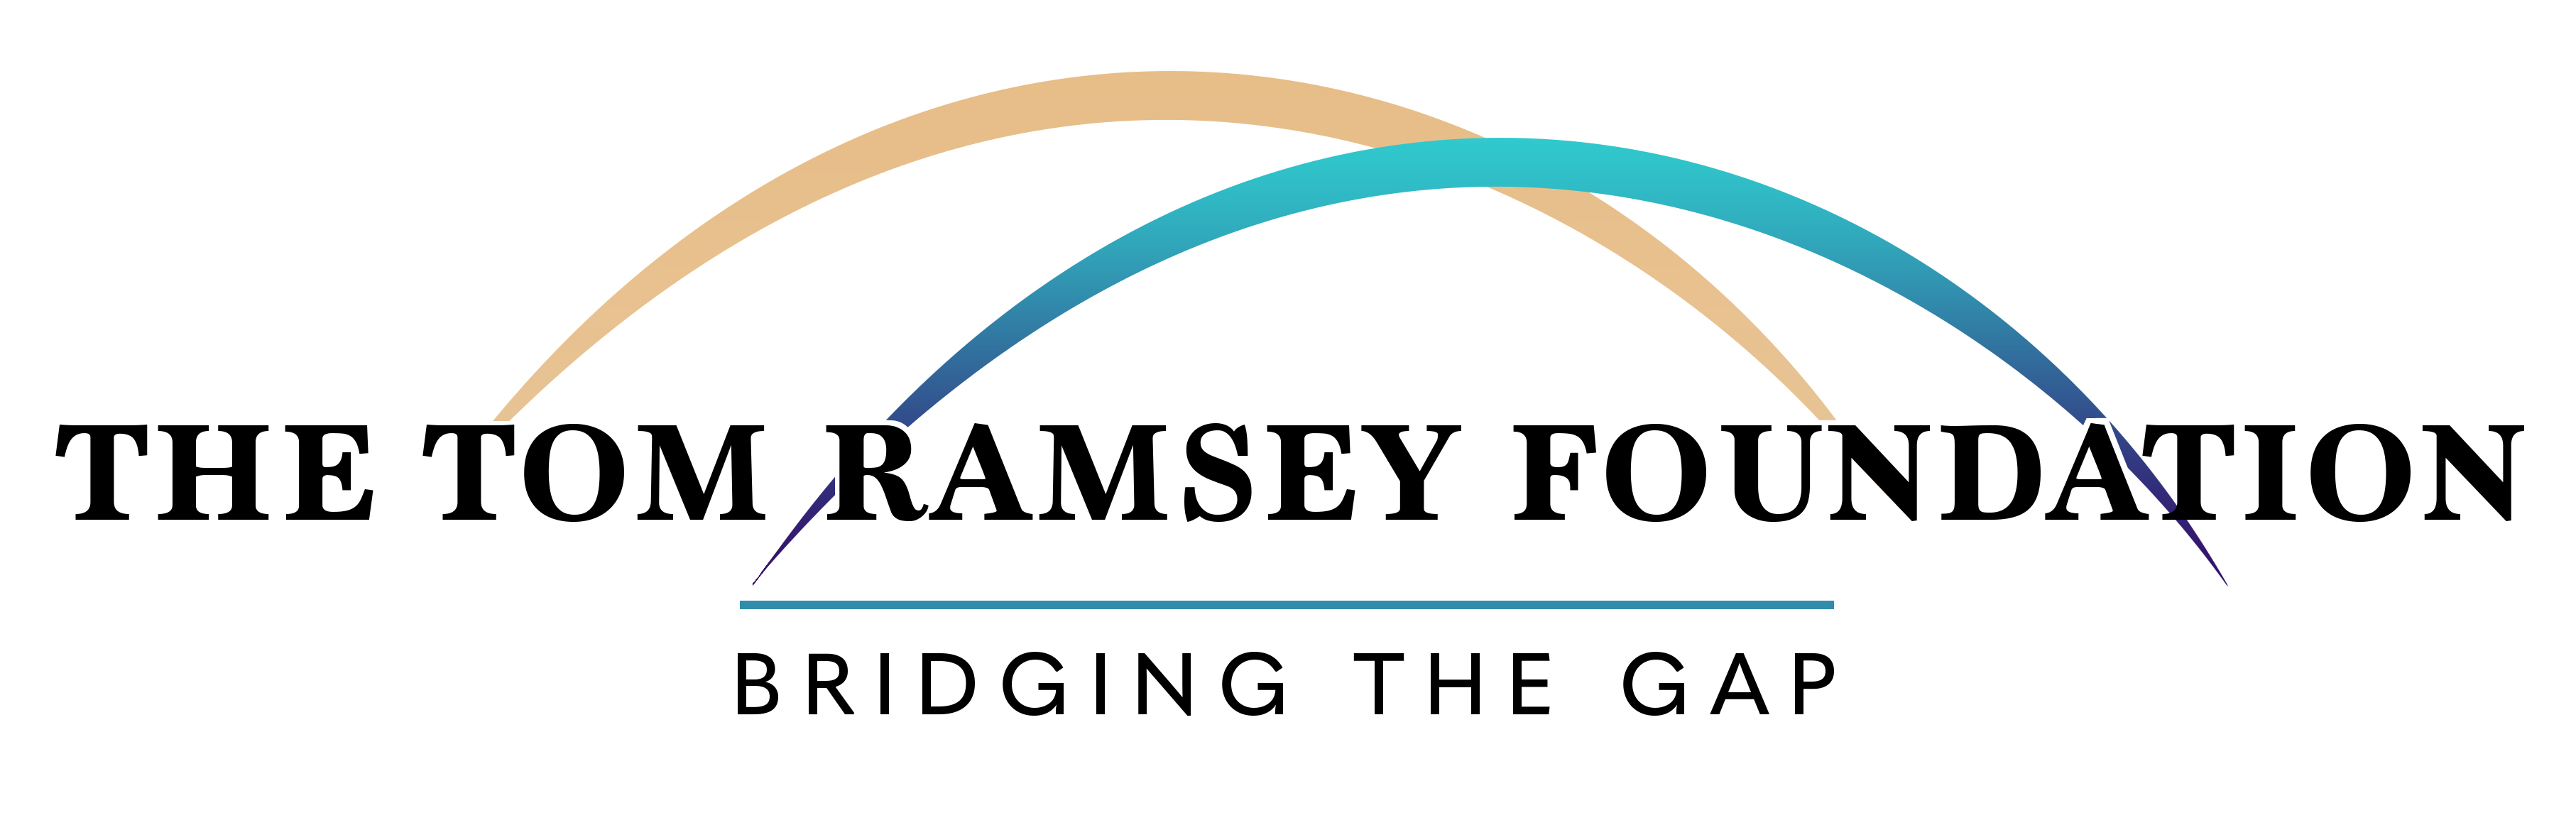 Tom Ramsay Foundation